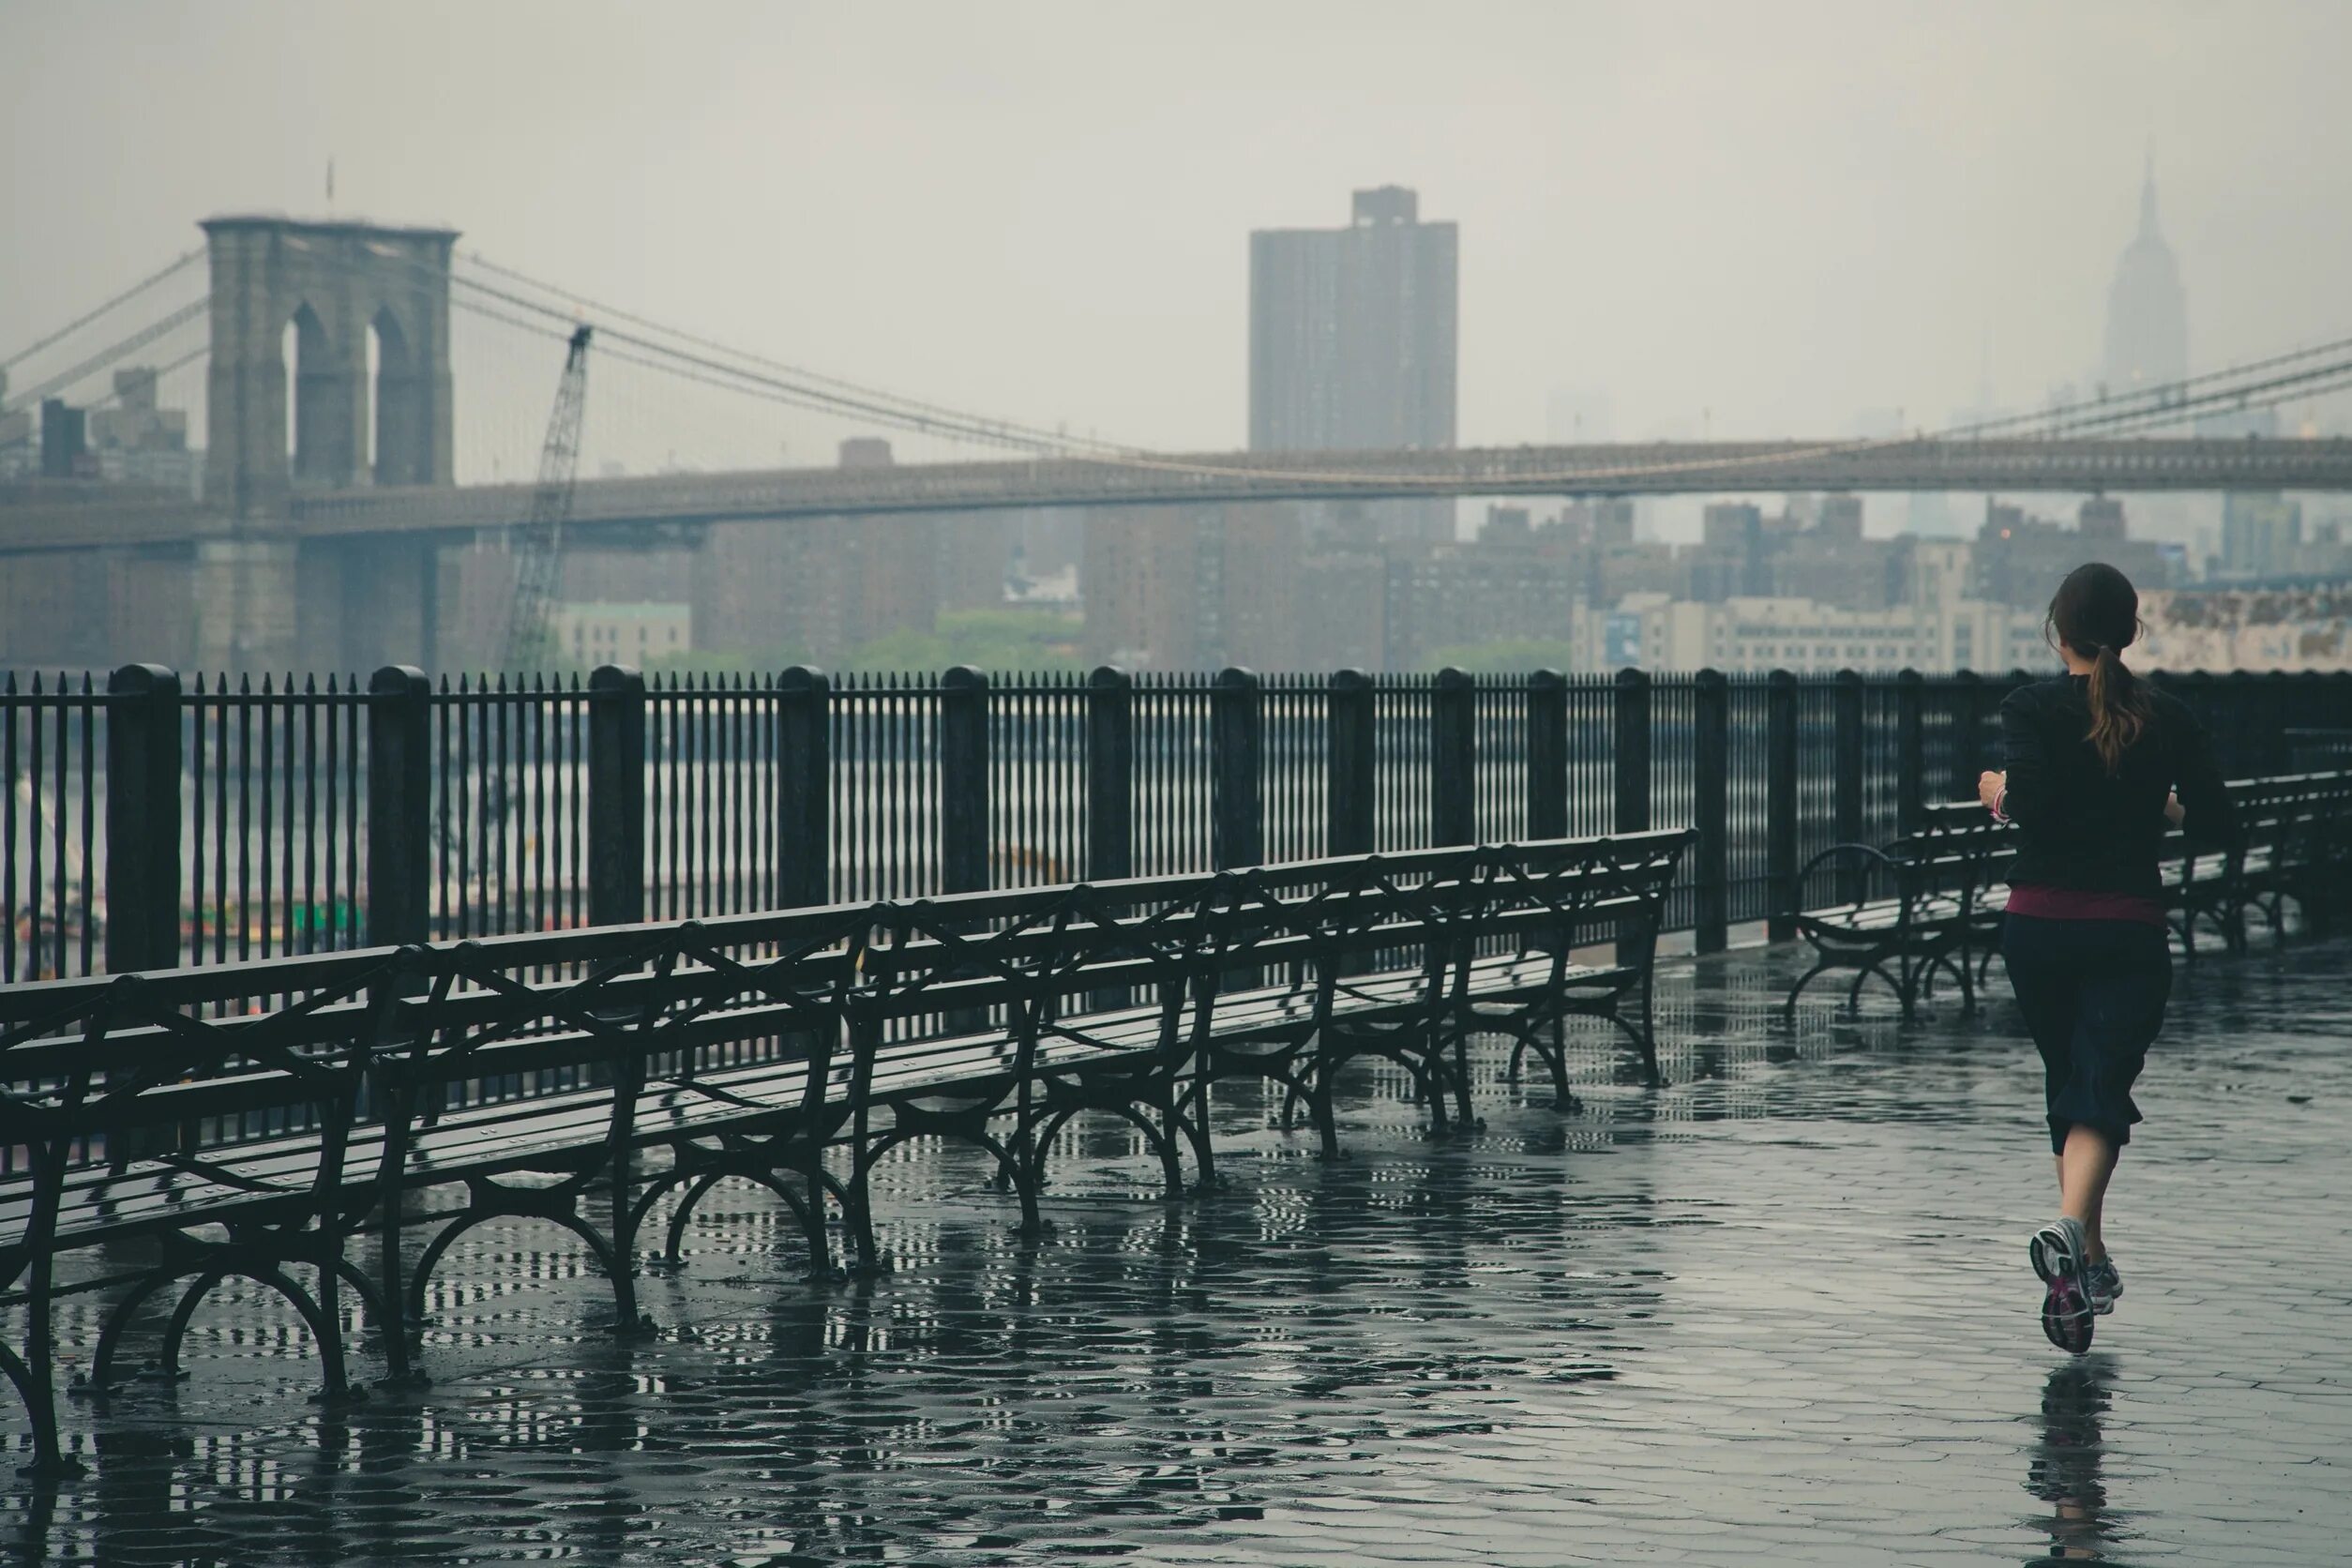 Мост. Девушка на мосту. Человек на мосту. Мост дождь.